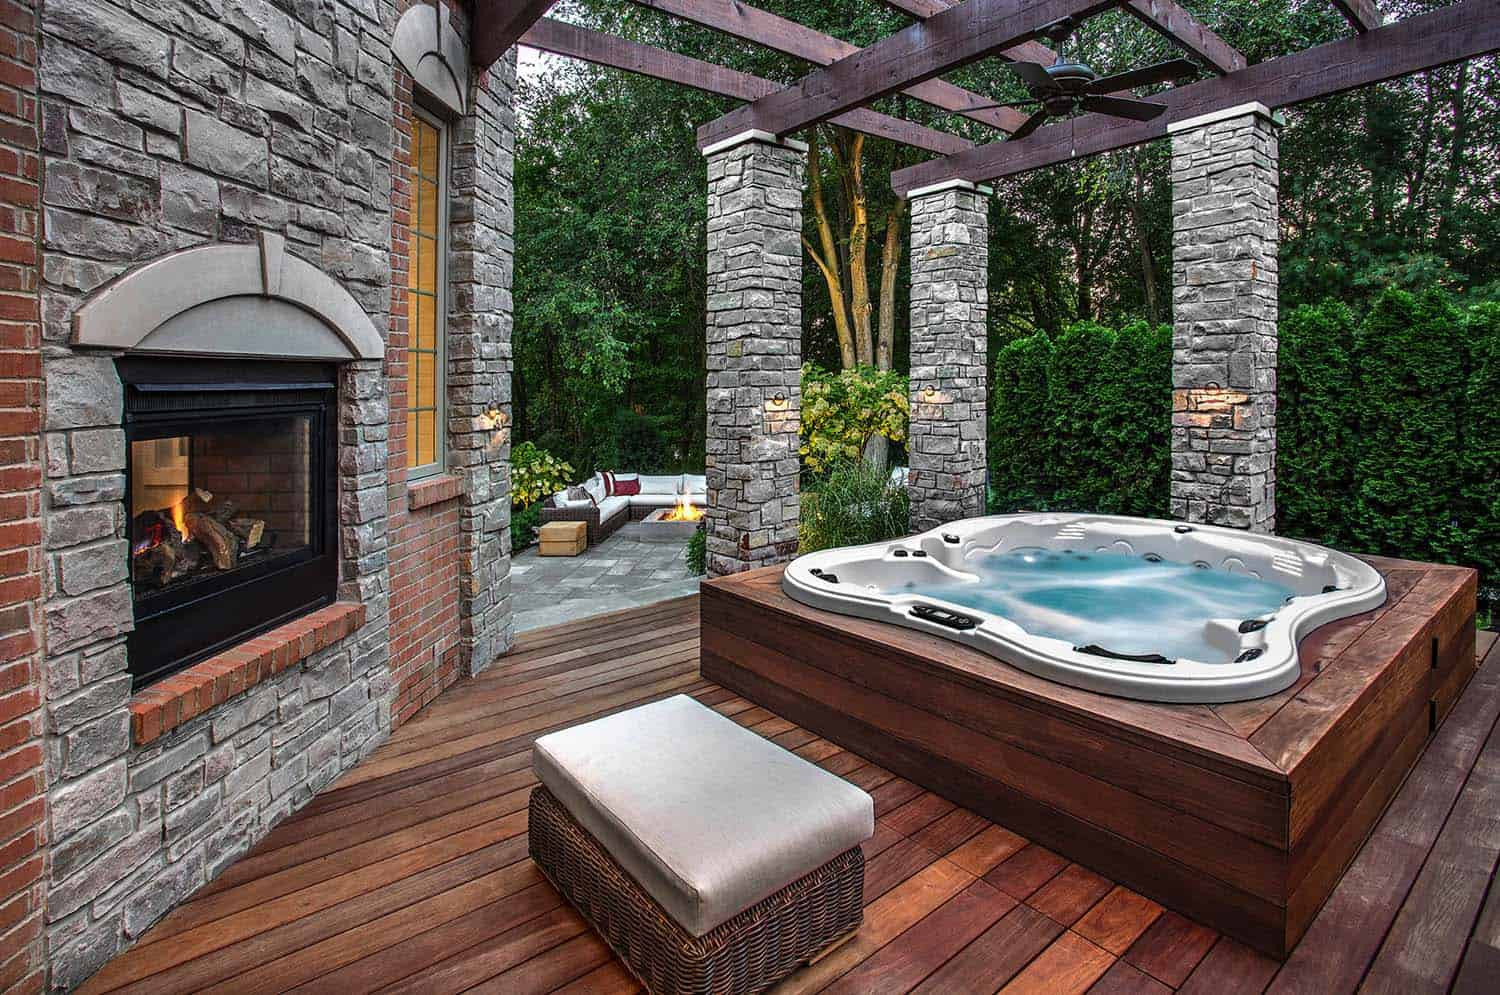 Hot Tub Backyard Ideas
 40 Outstanding Hot Tub Ideas To Create A Backyard Oasis